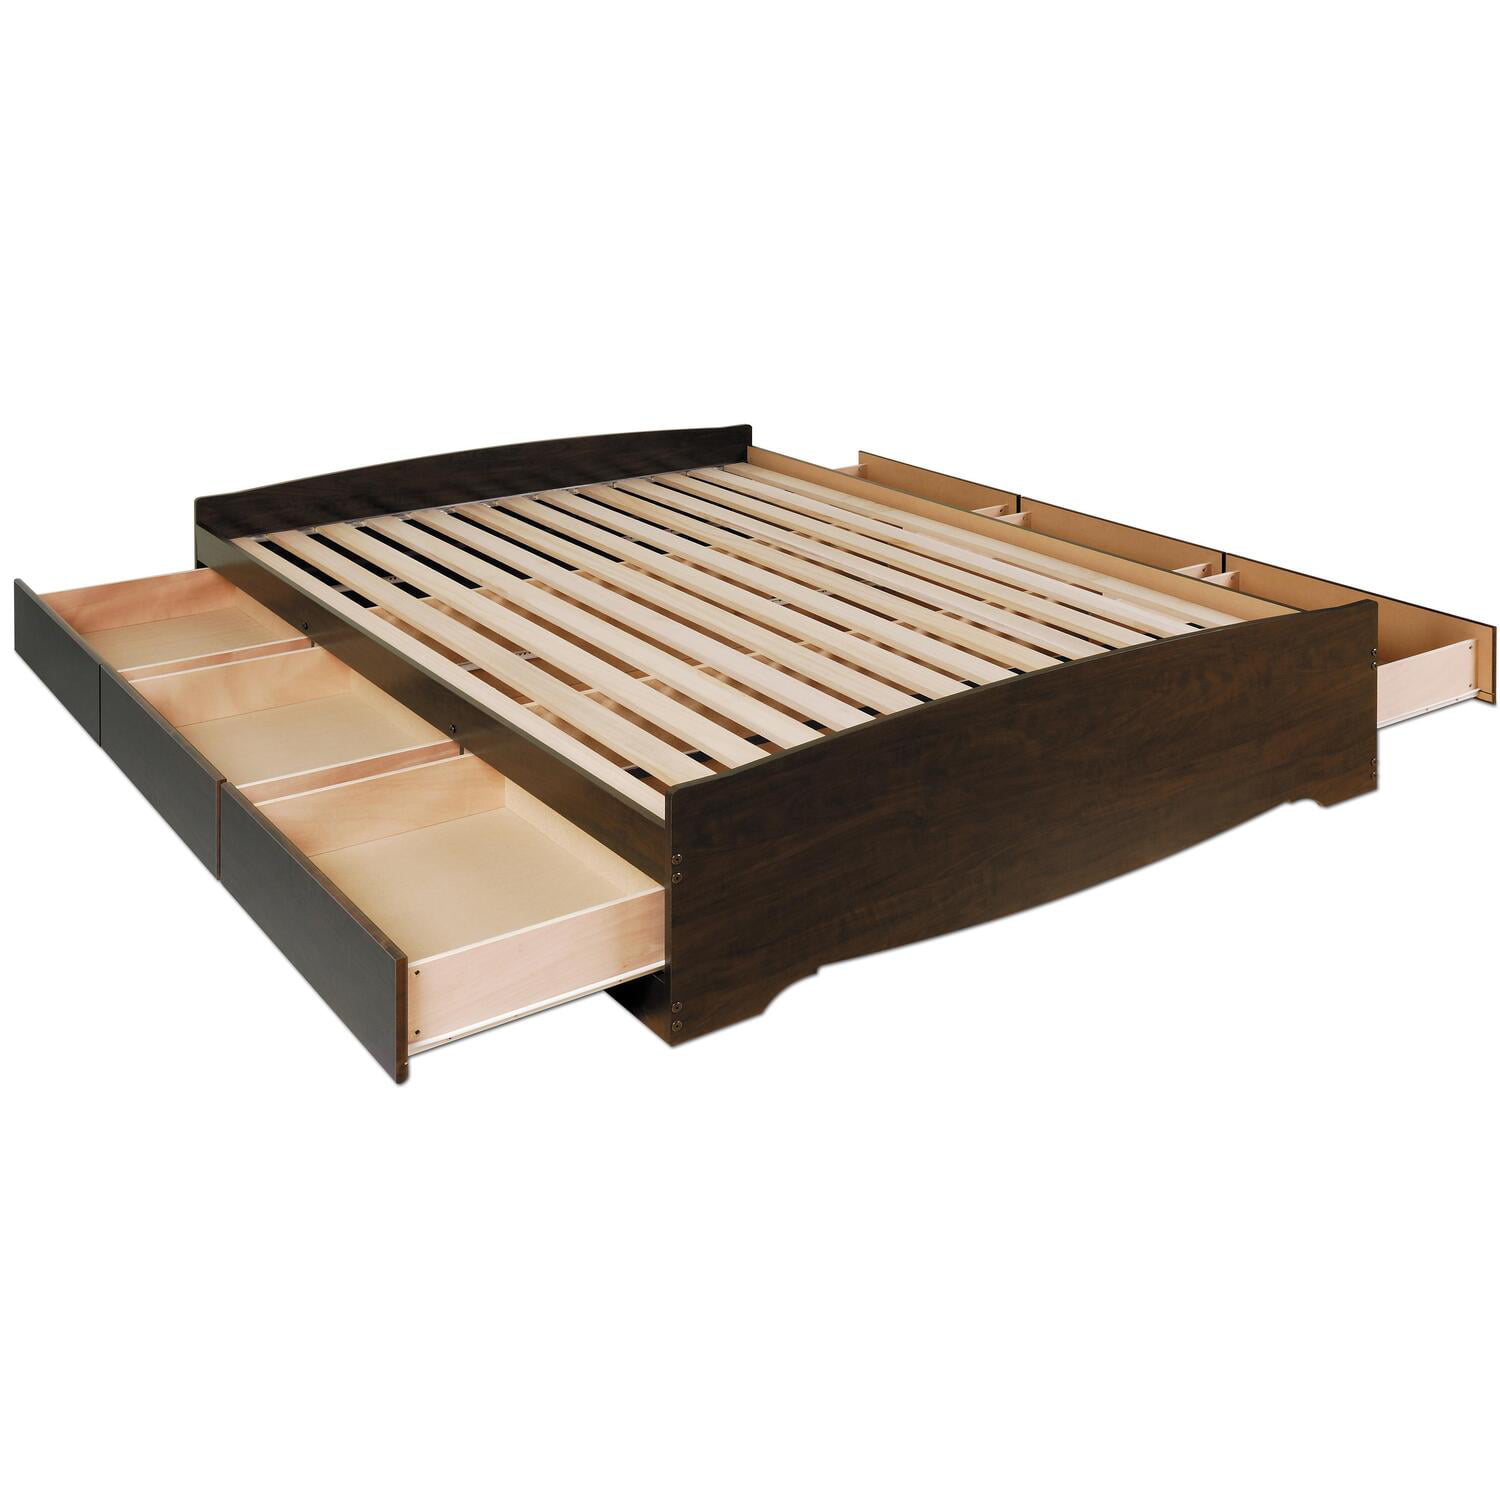 Prepac Mate S Platform Storage Bed With, Prepac Sonoma Black King Platform Storage Bed With 6 Drawers